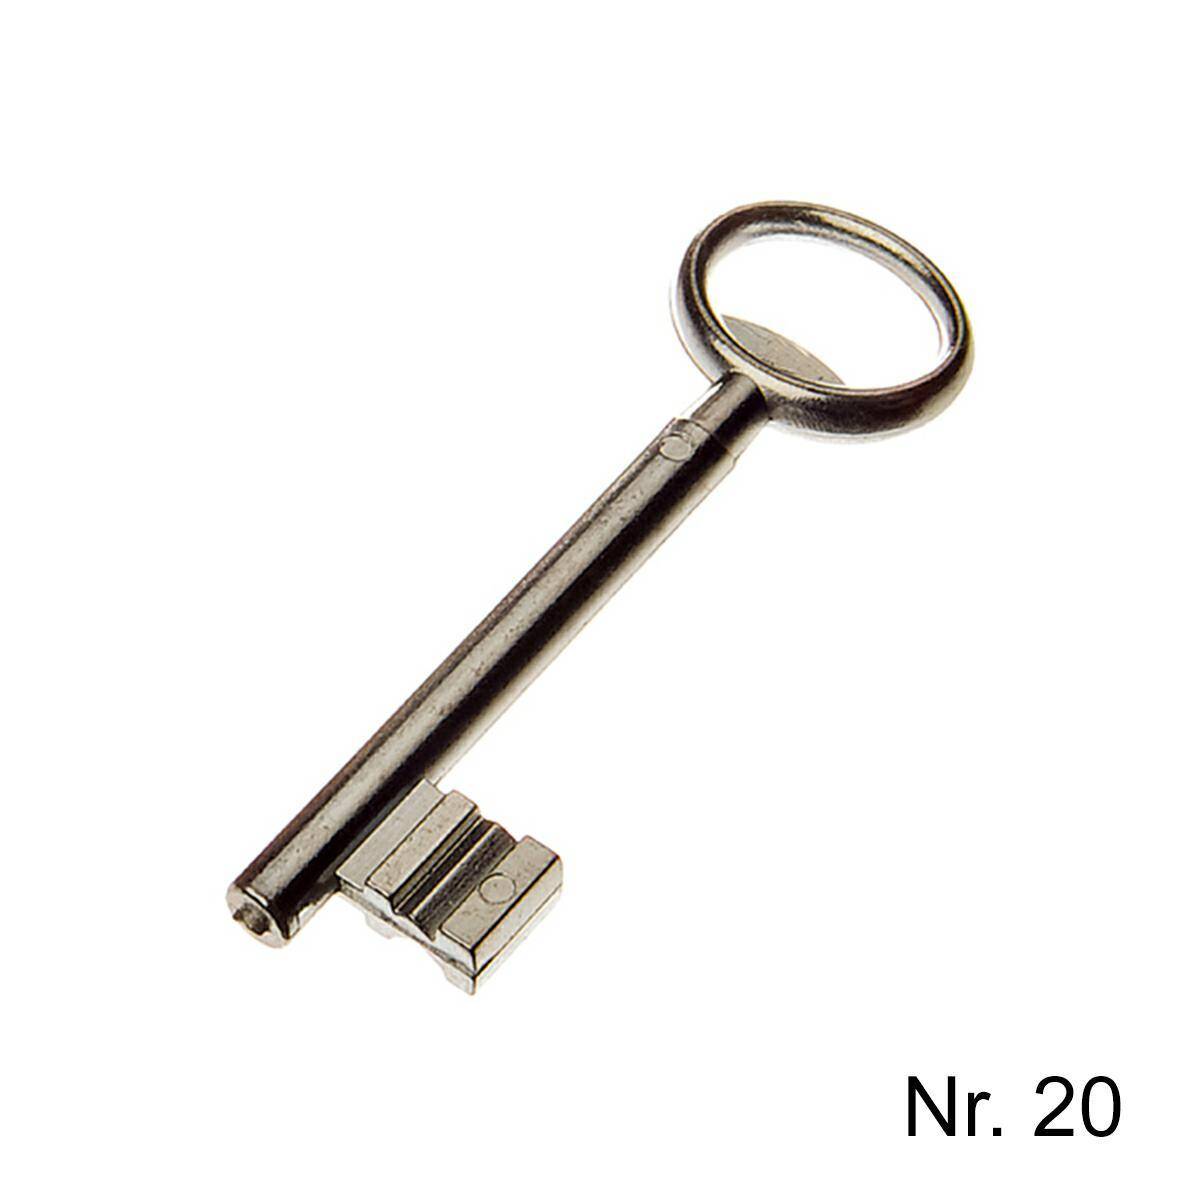 Cast key Jania for the lock - No. 20